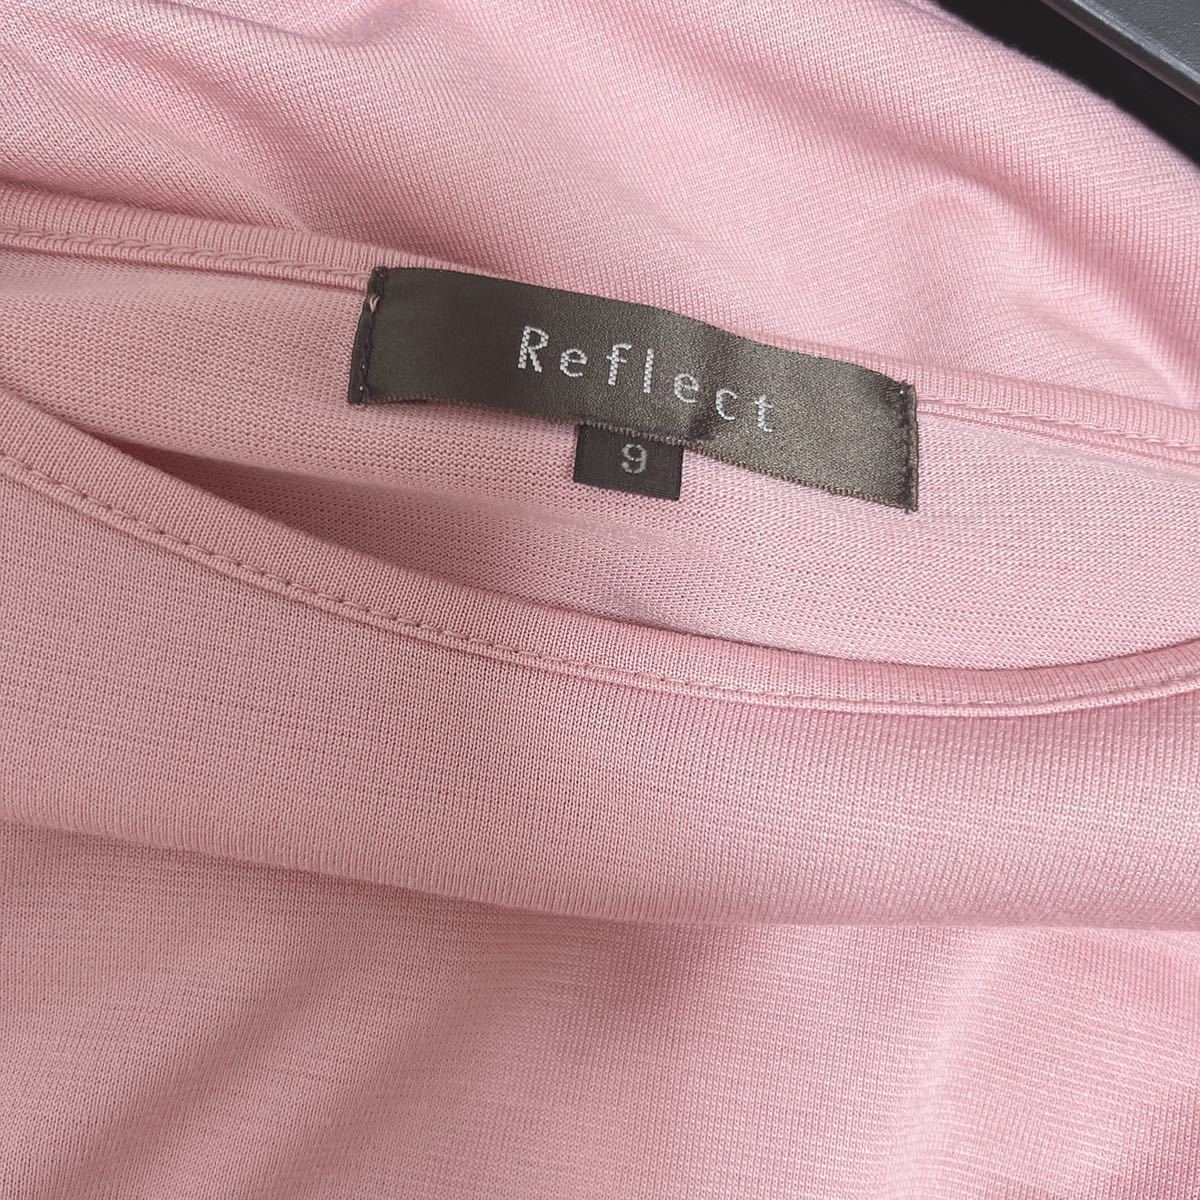 Reflect Reflect *... необычность материалы комбинированный tops 9 розовый * футболка cut and sewn Untitled Indivi Coup de Chance 23 район 